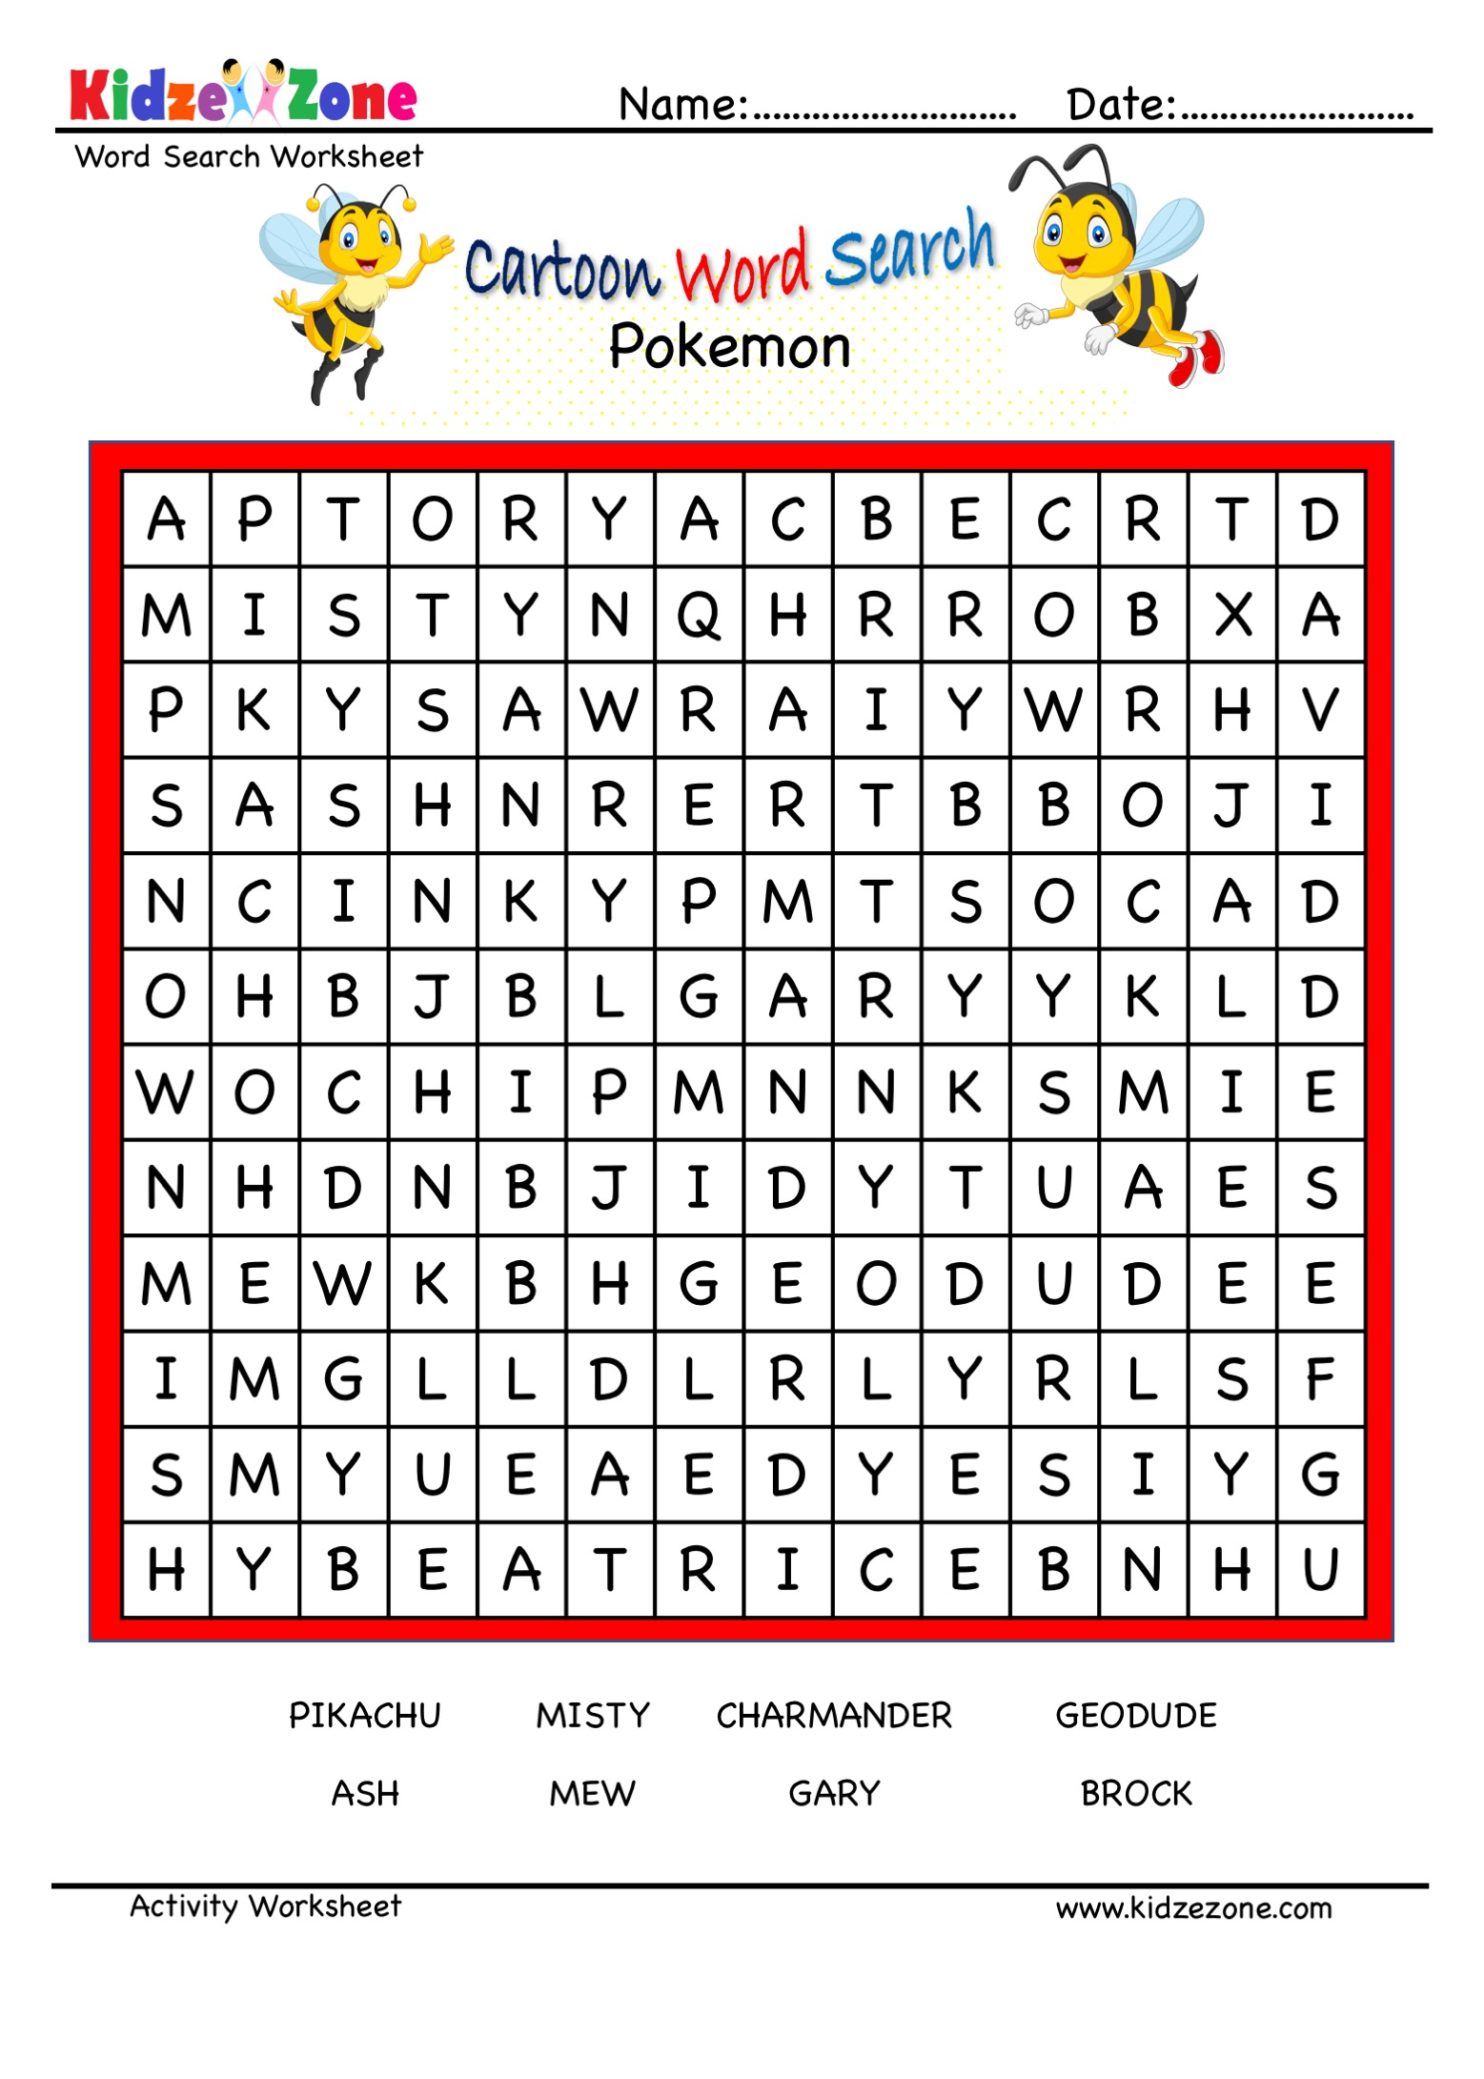 Pokemon Character Word Search Puzzle KidzeZone